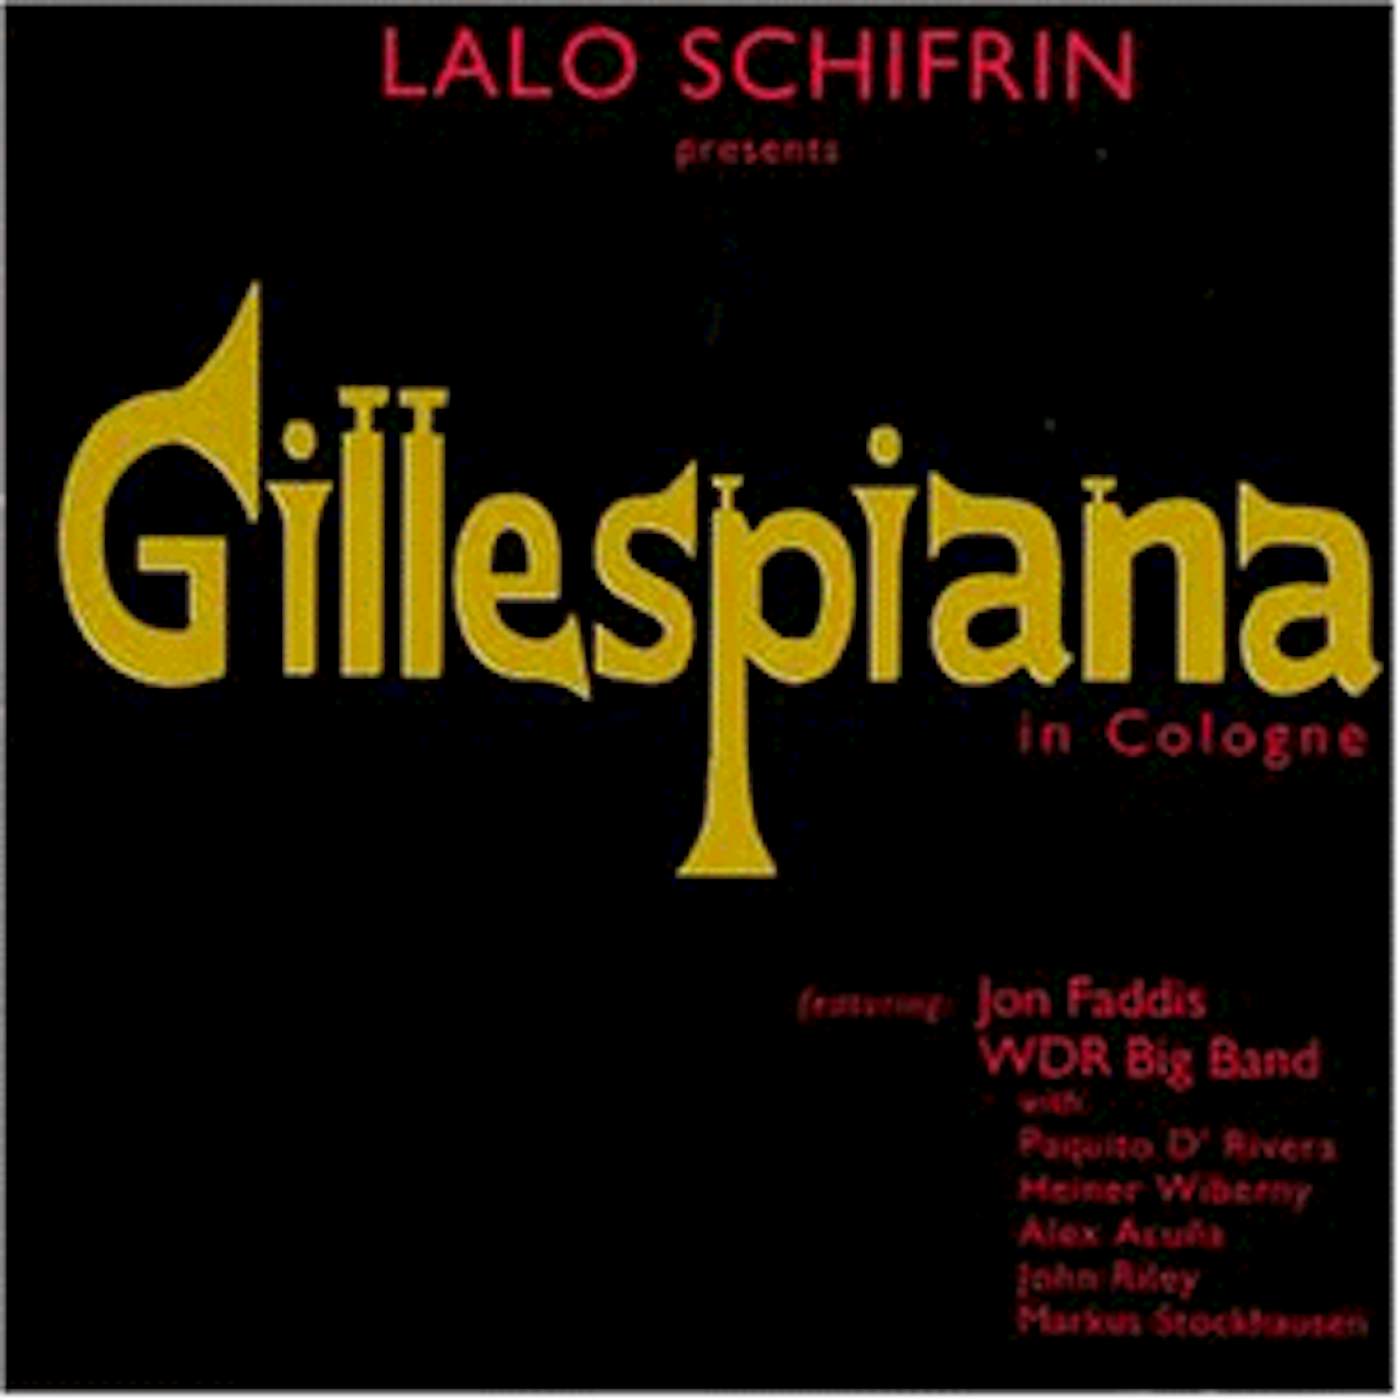 Lalo Schifrin GILLESPIANA CD